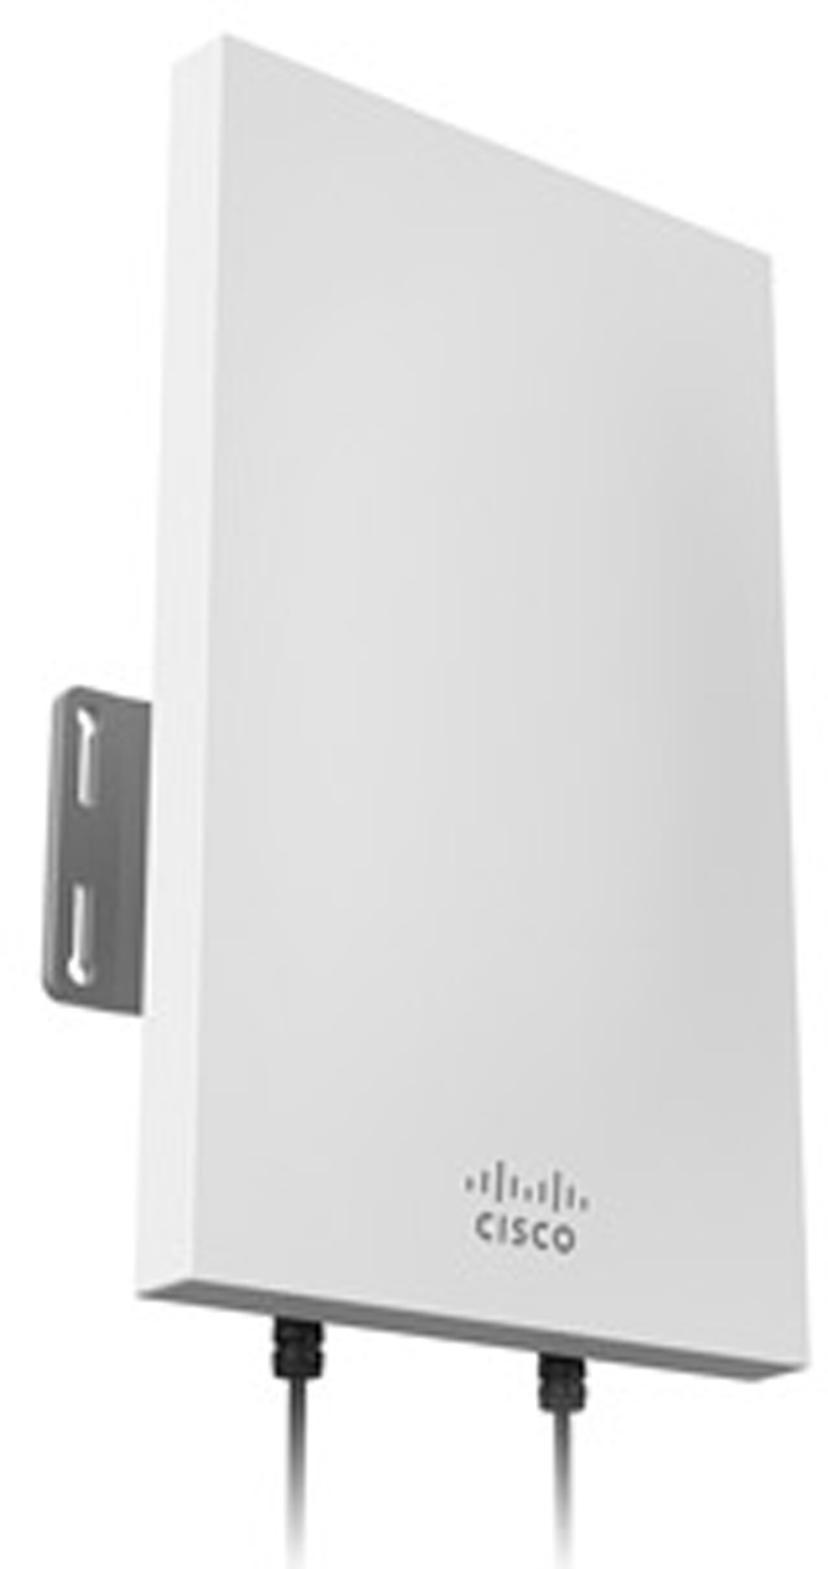 Cisco Ma-ant-23 2.4ghz Sector Antenna